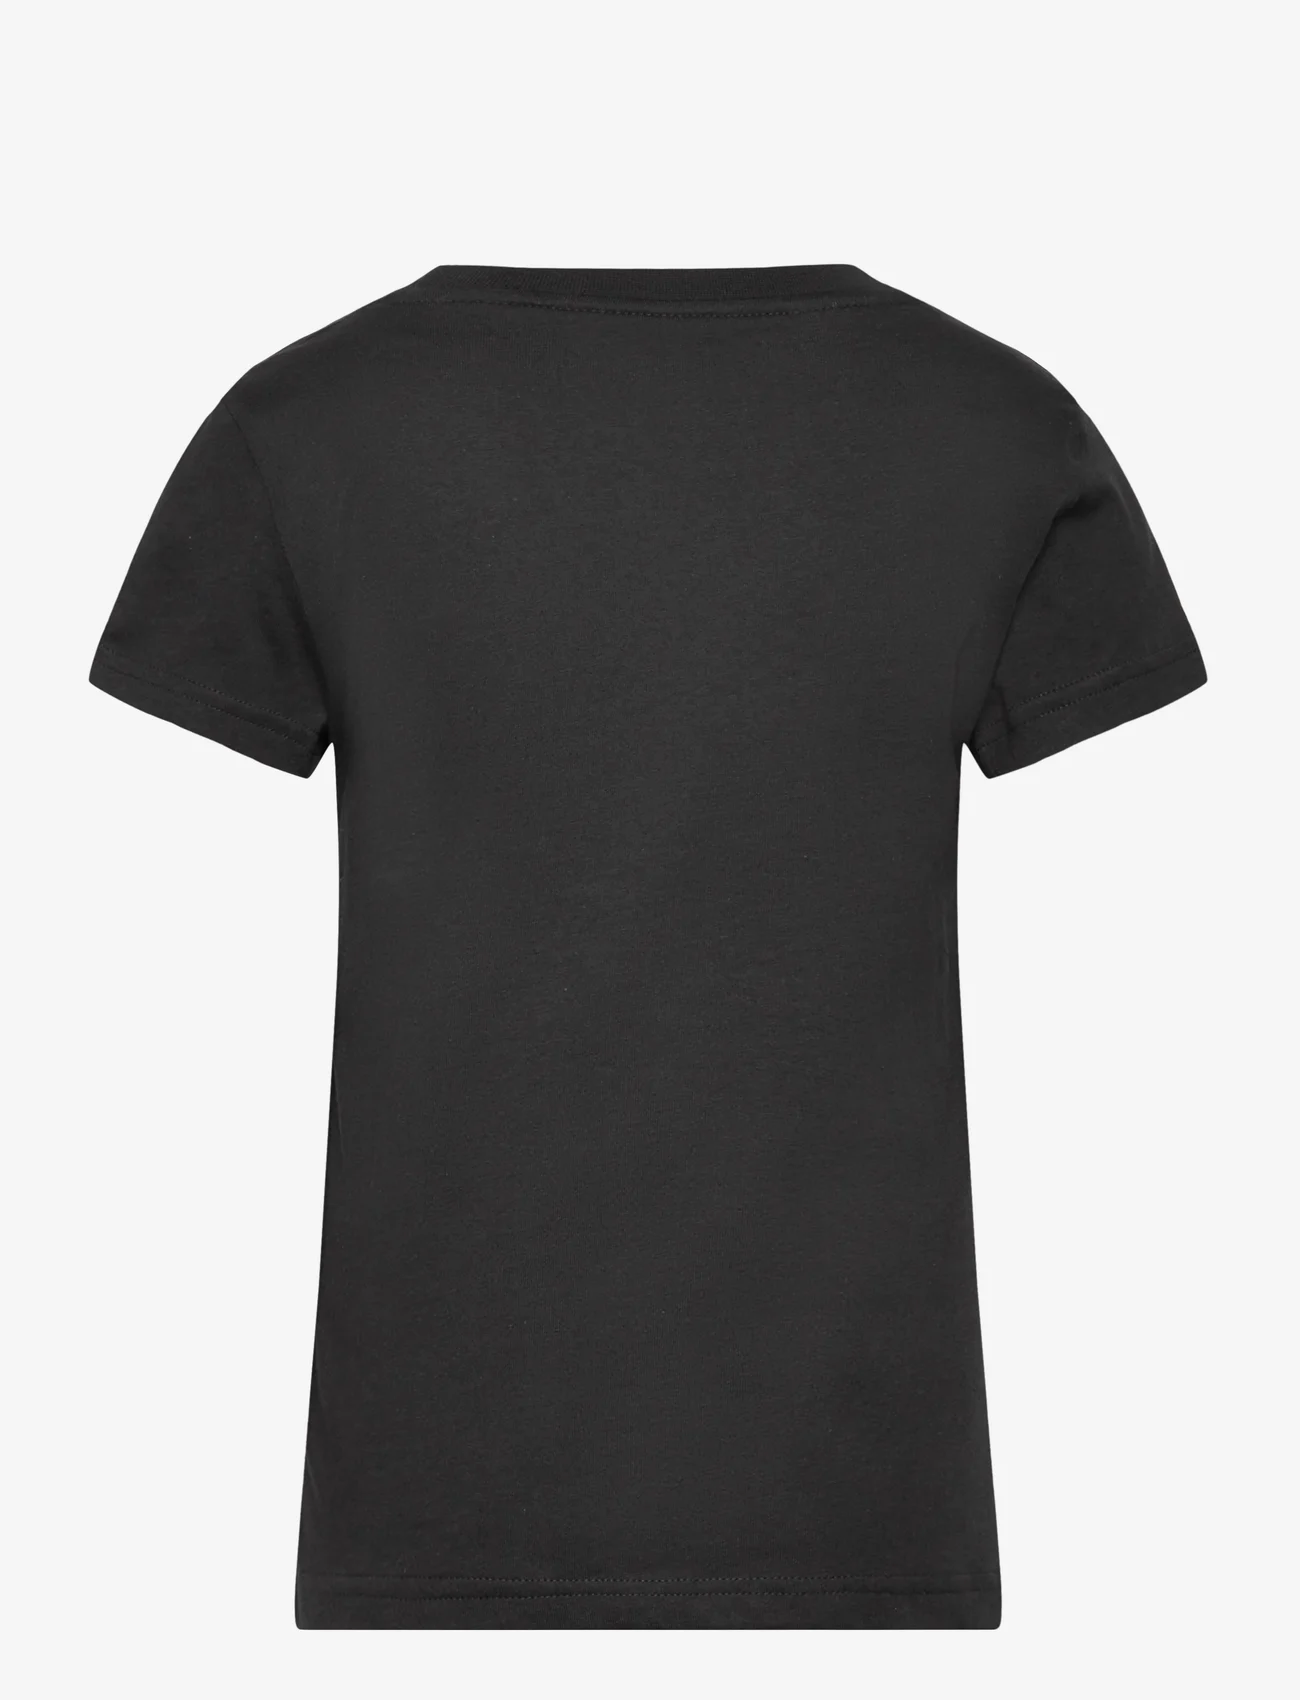 adidas Performance - G BL T - short-sleeved t-shirts - black/white - 1